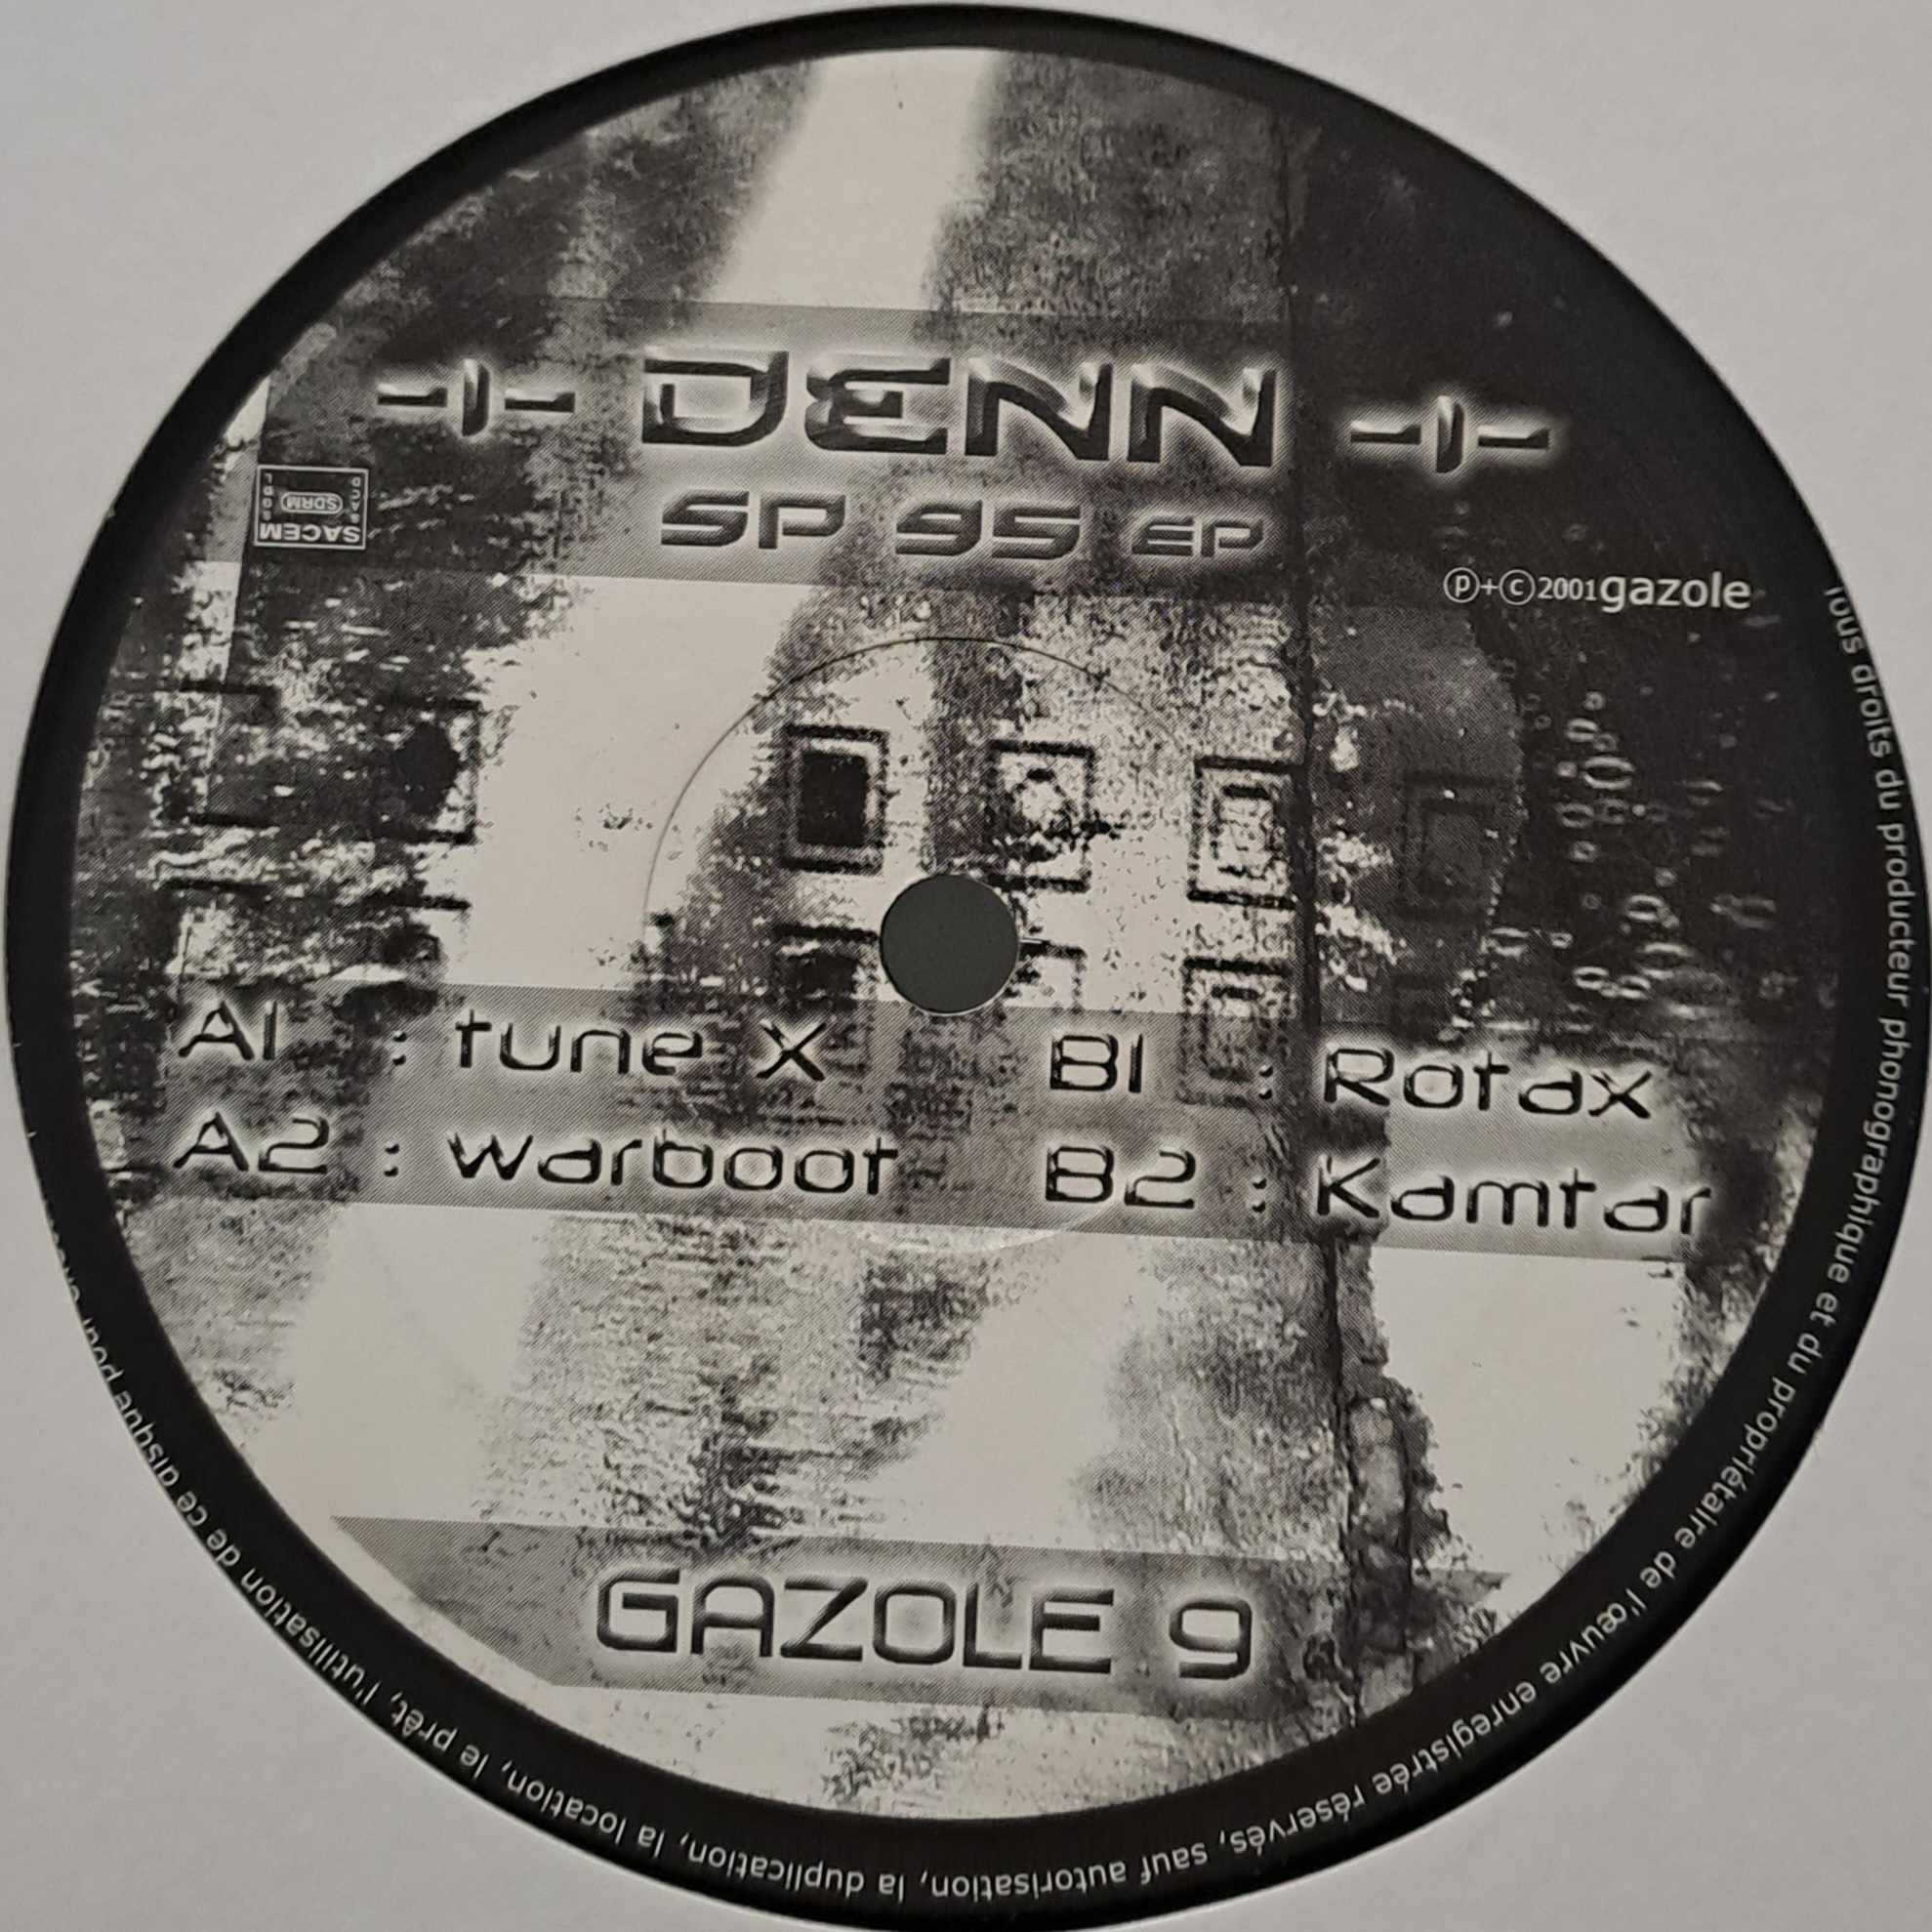 Gazole 09 - vinyle techno